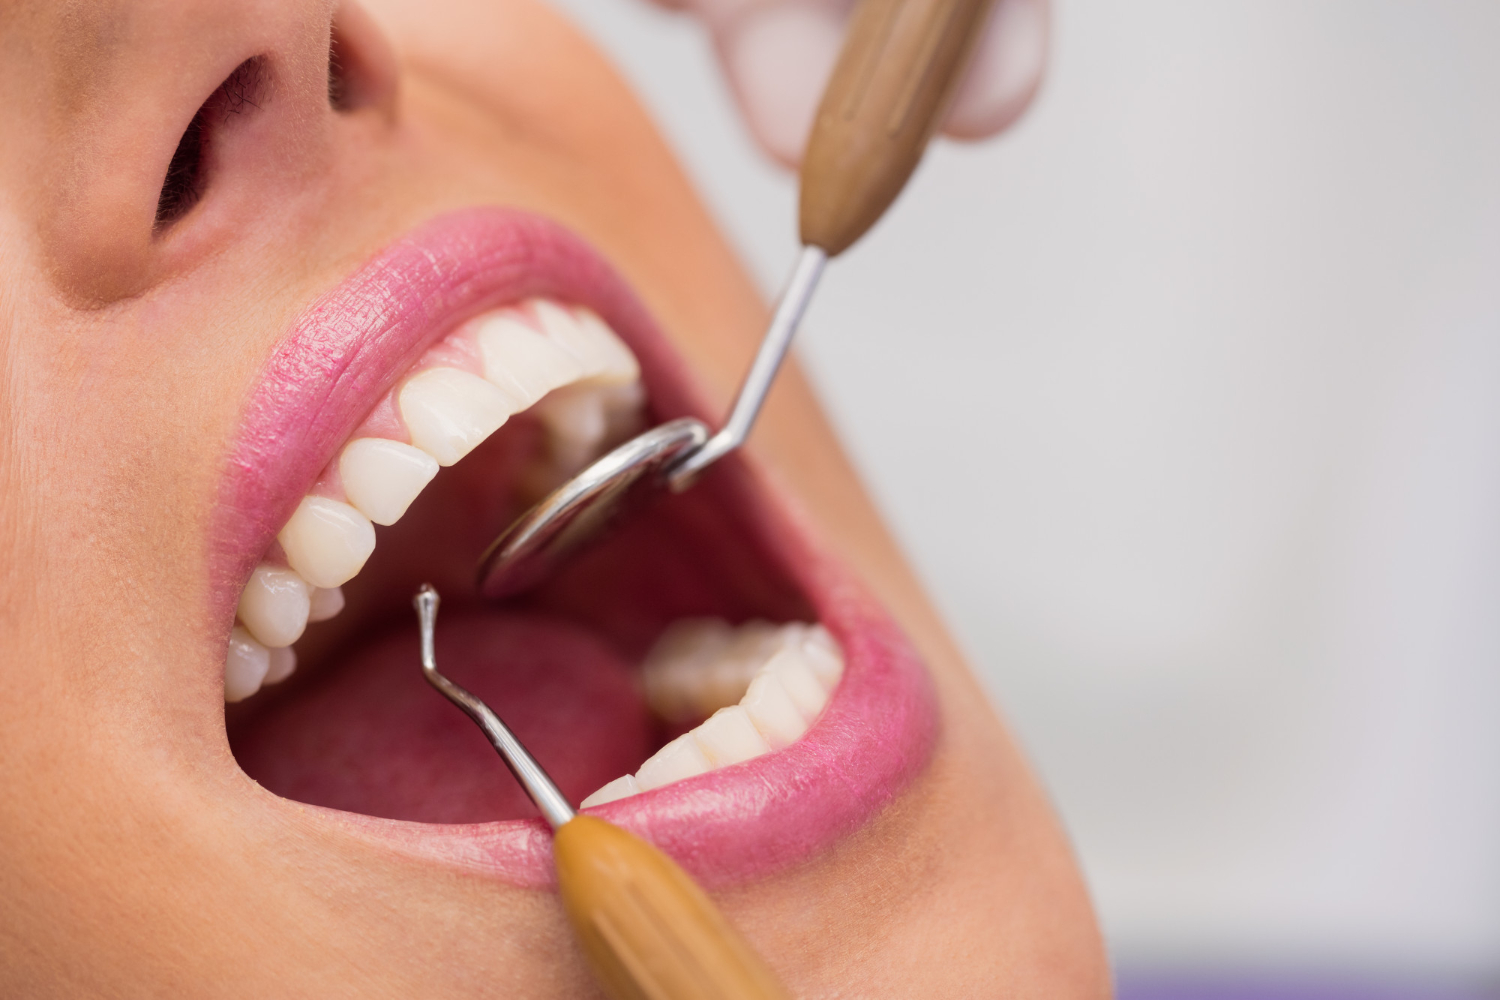 Raspado de encías - Precios endodoncia multirradicular - Clínica Dental Lavapiés